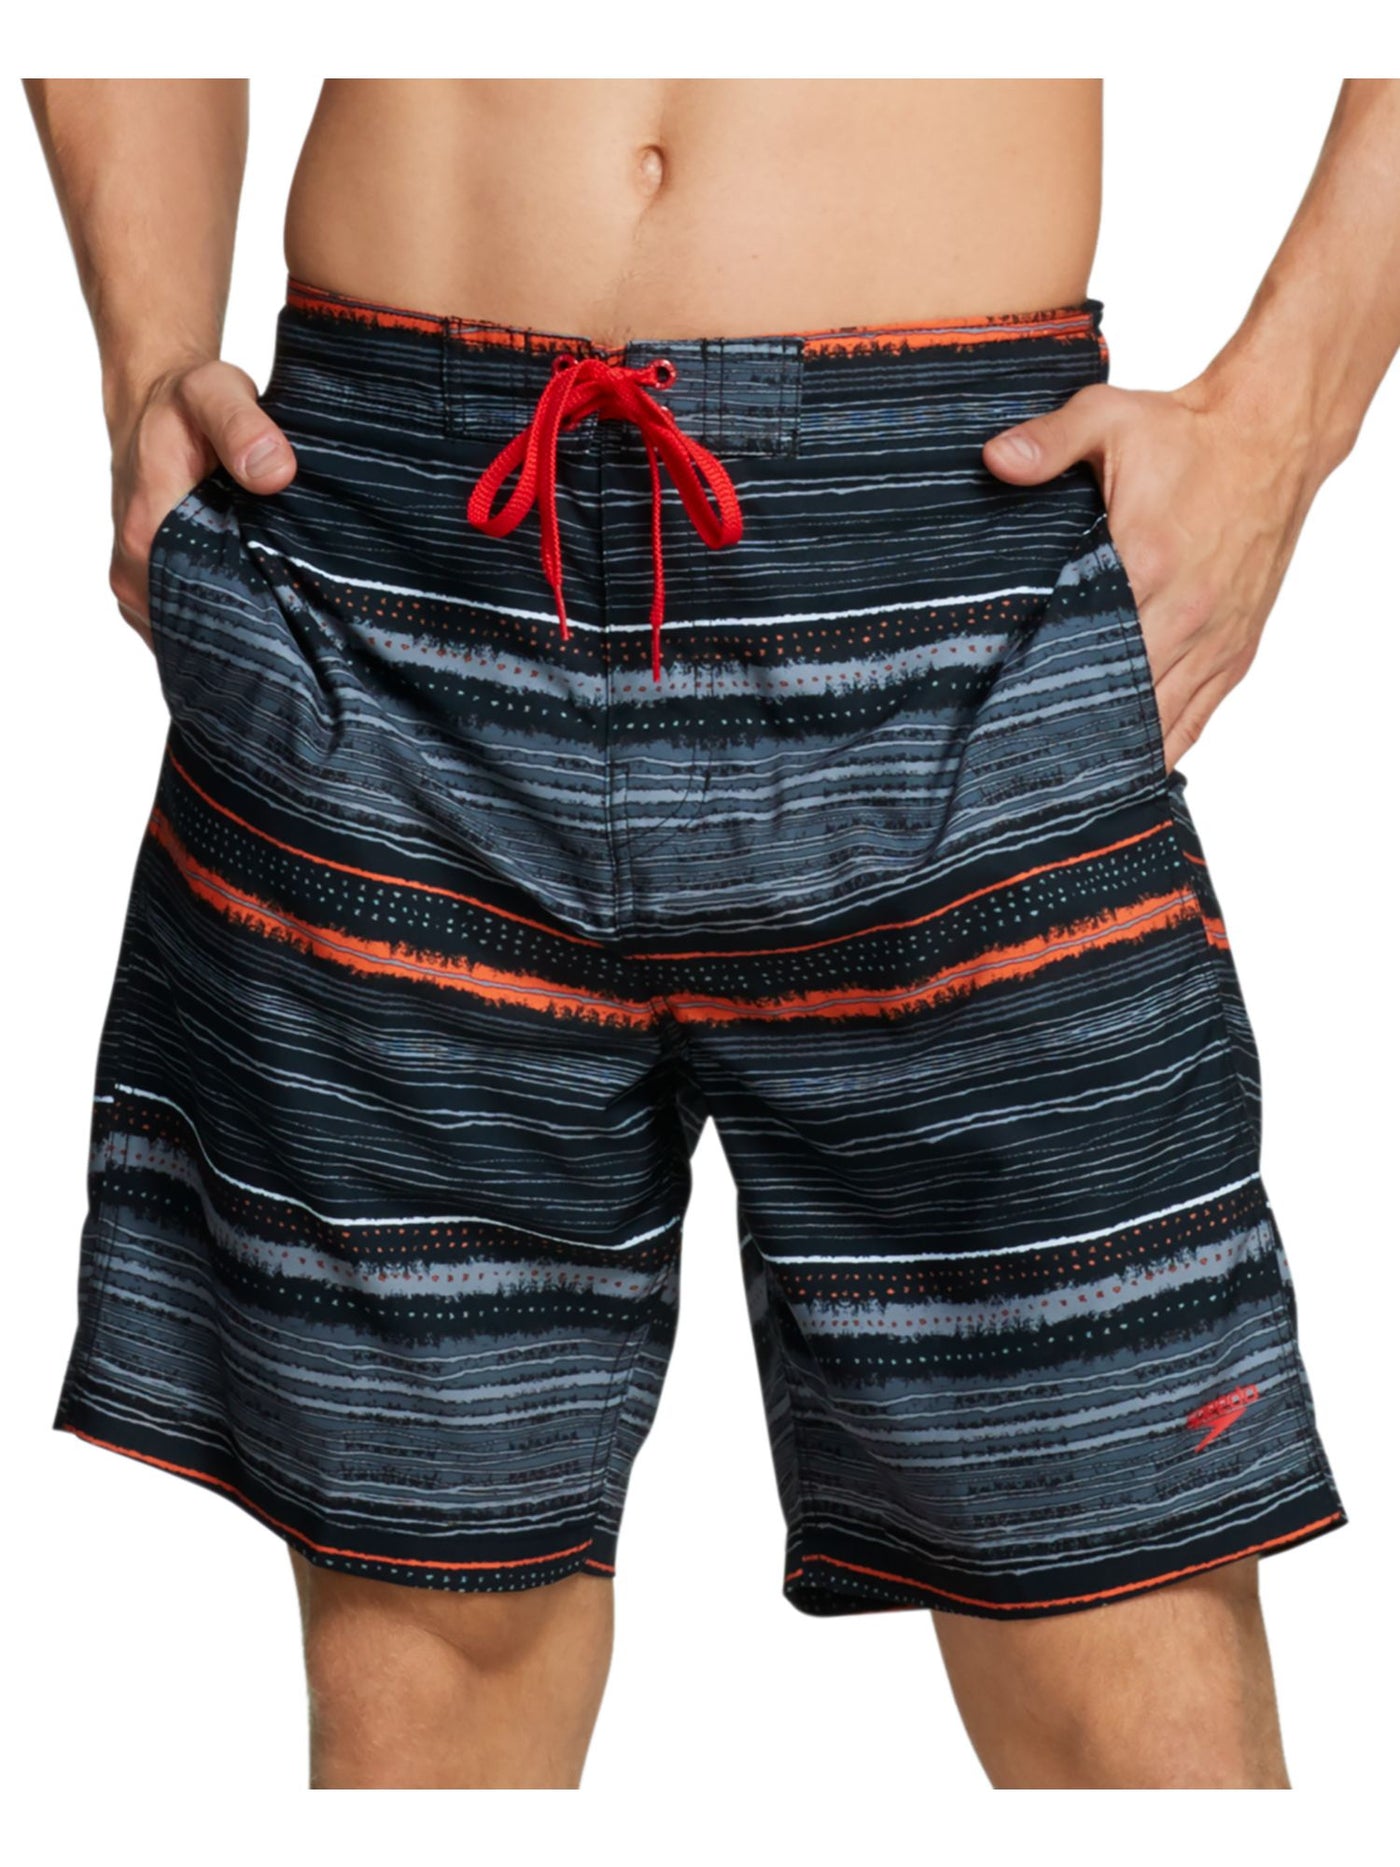 SPEEDO Mens Black Striped Regular Fit Shorts XL